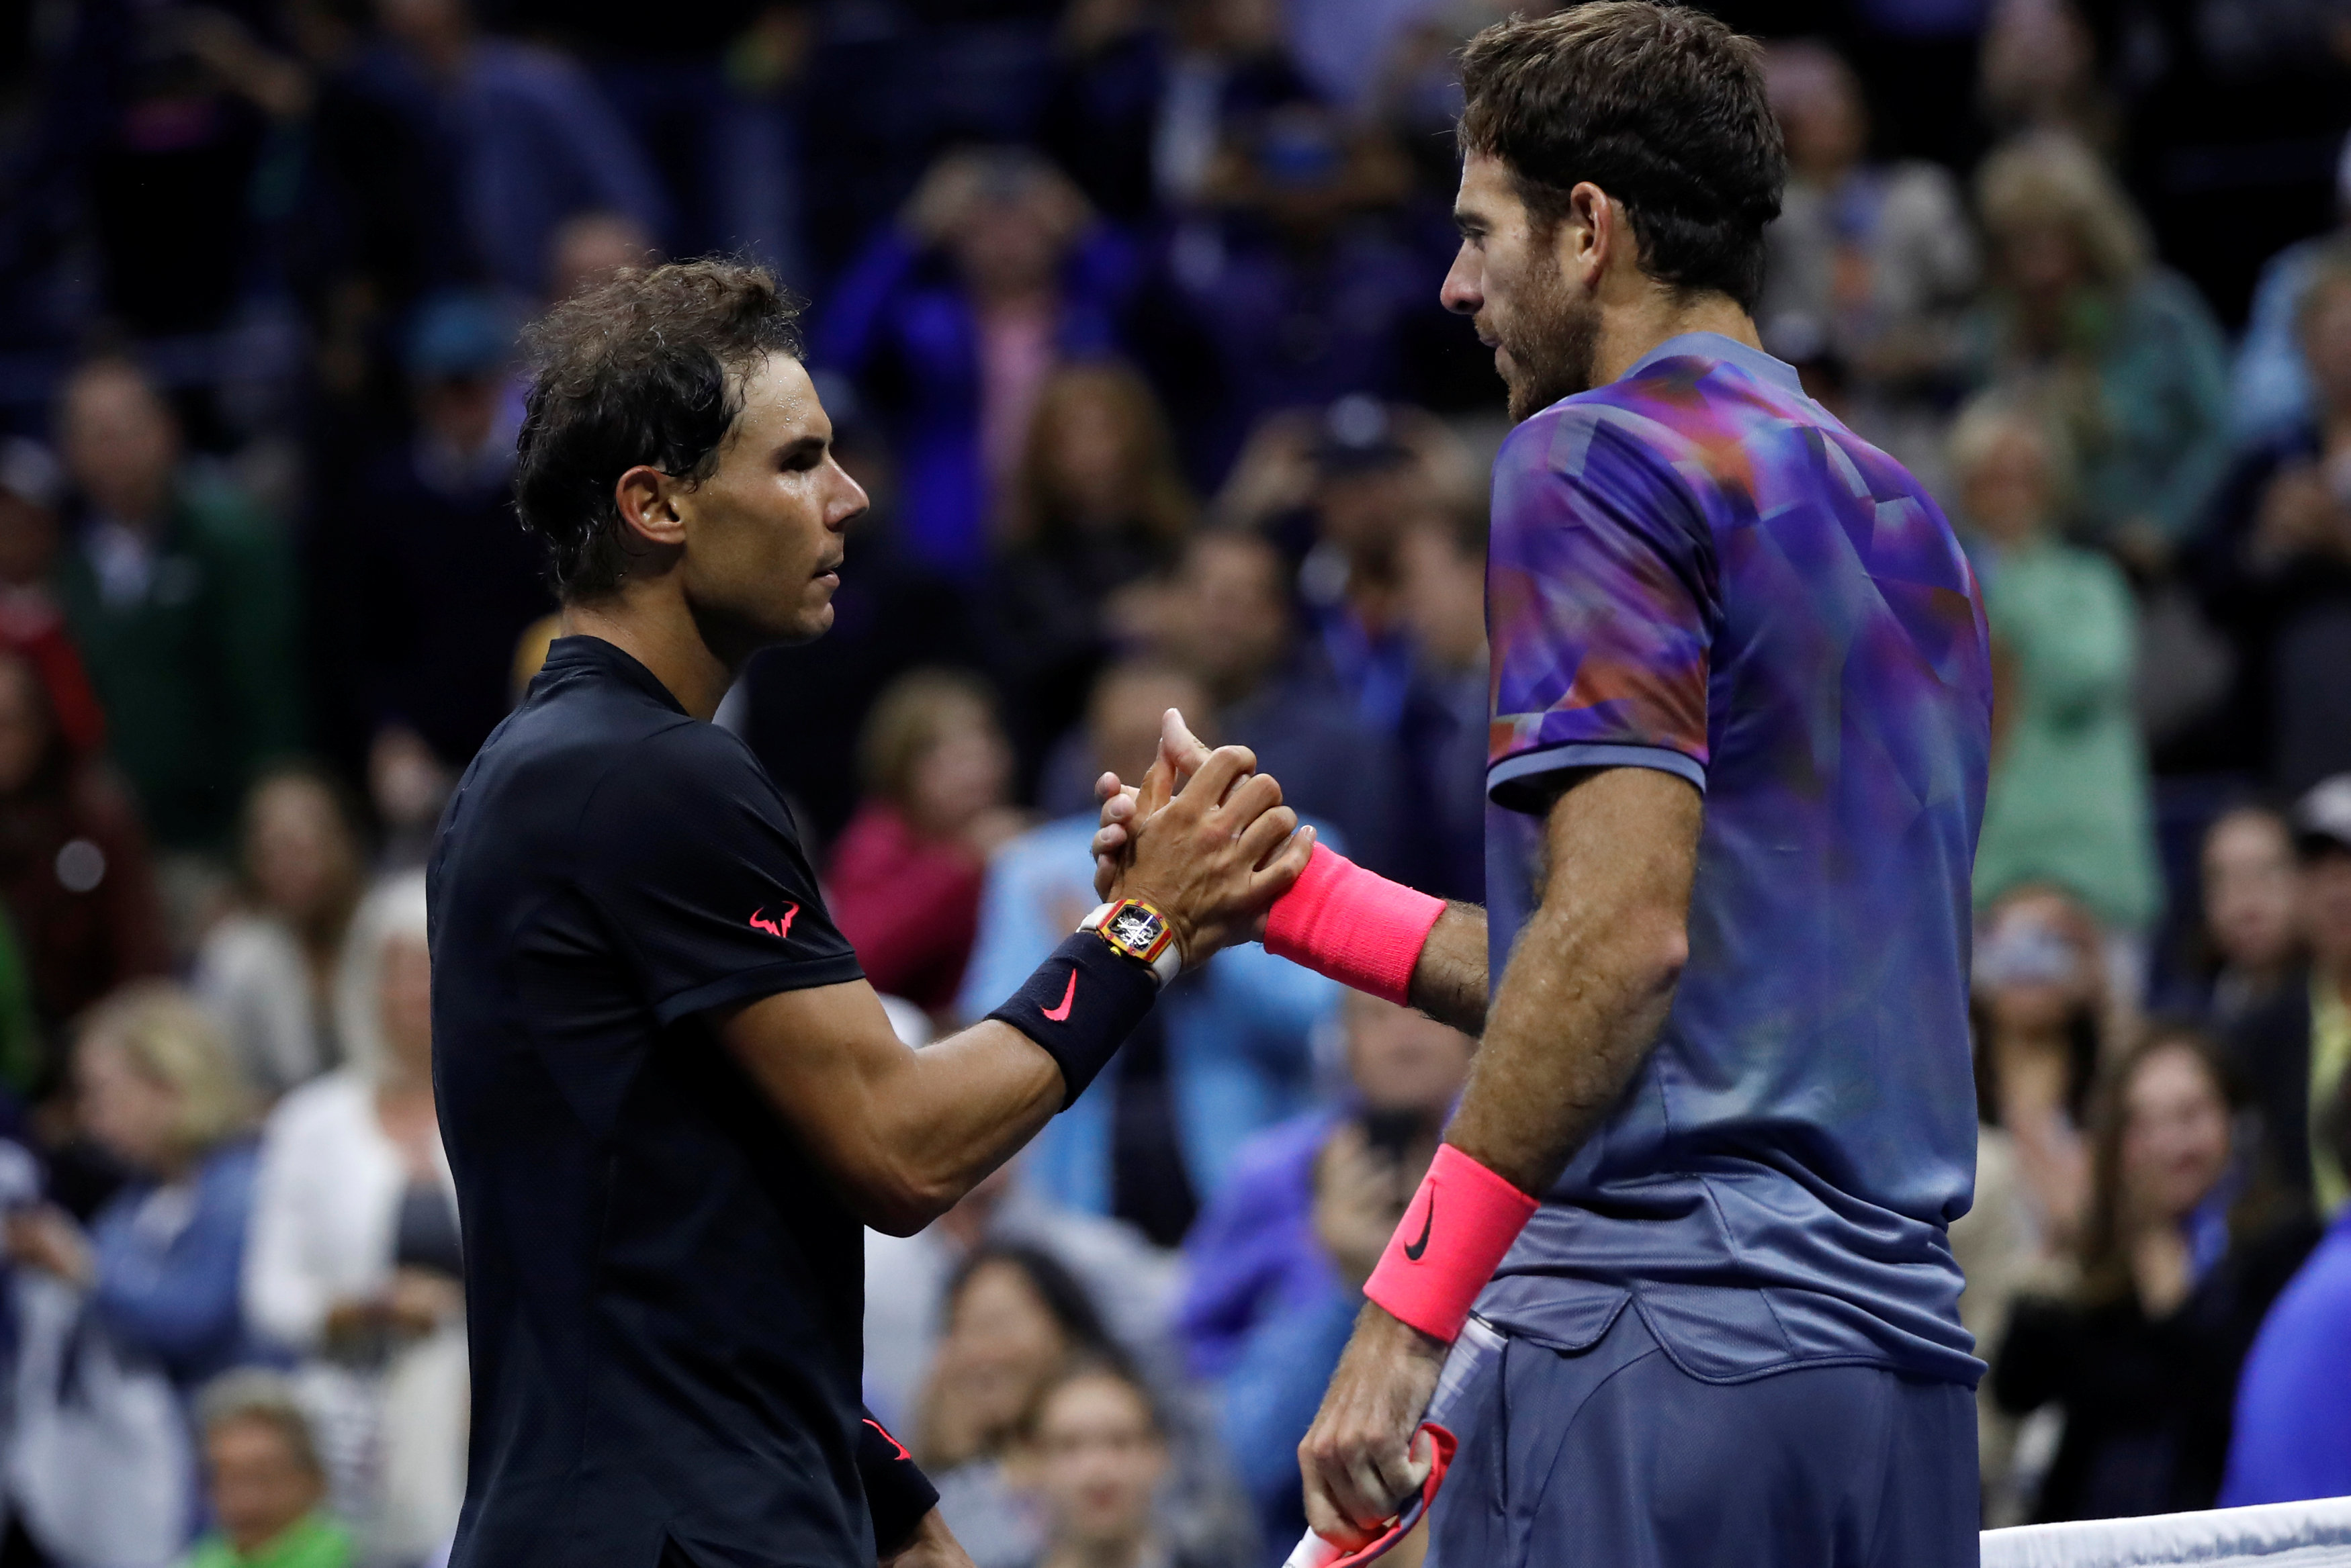 Tennis: Nadal gets his revenge, ends Del Potro dream run at U.S. Open